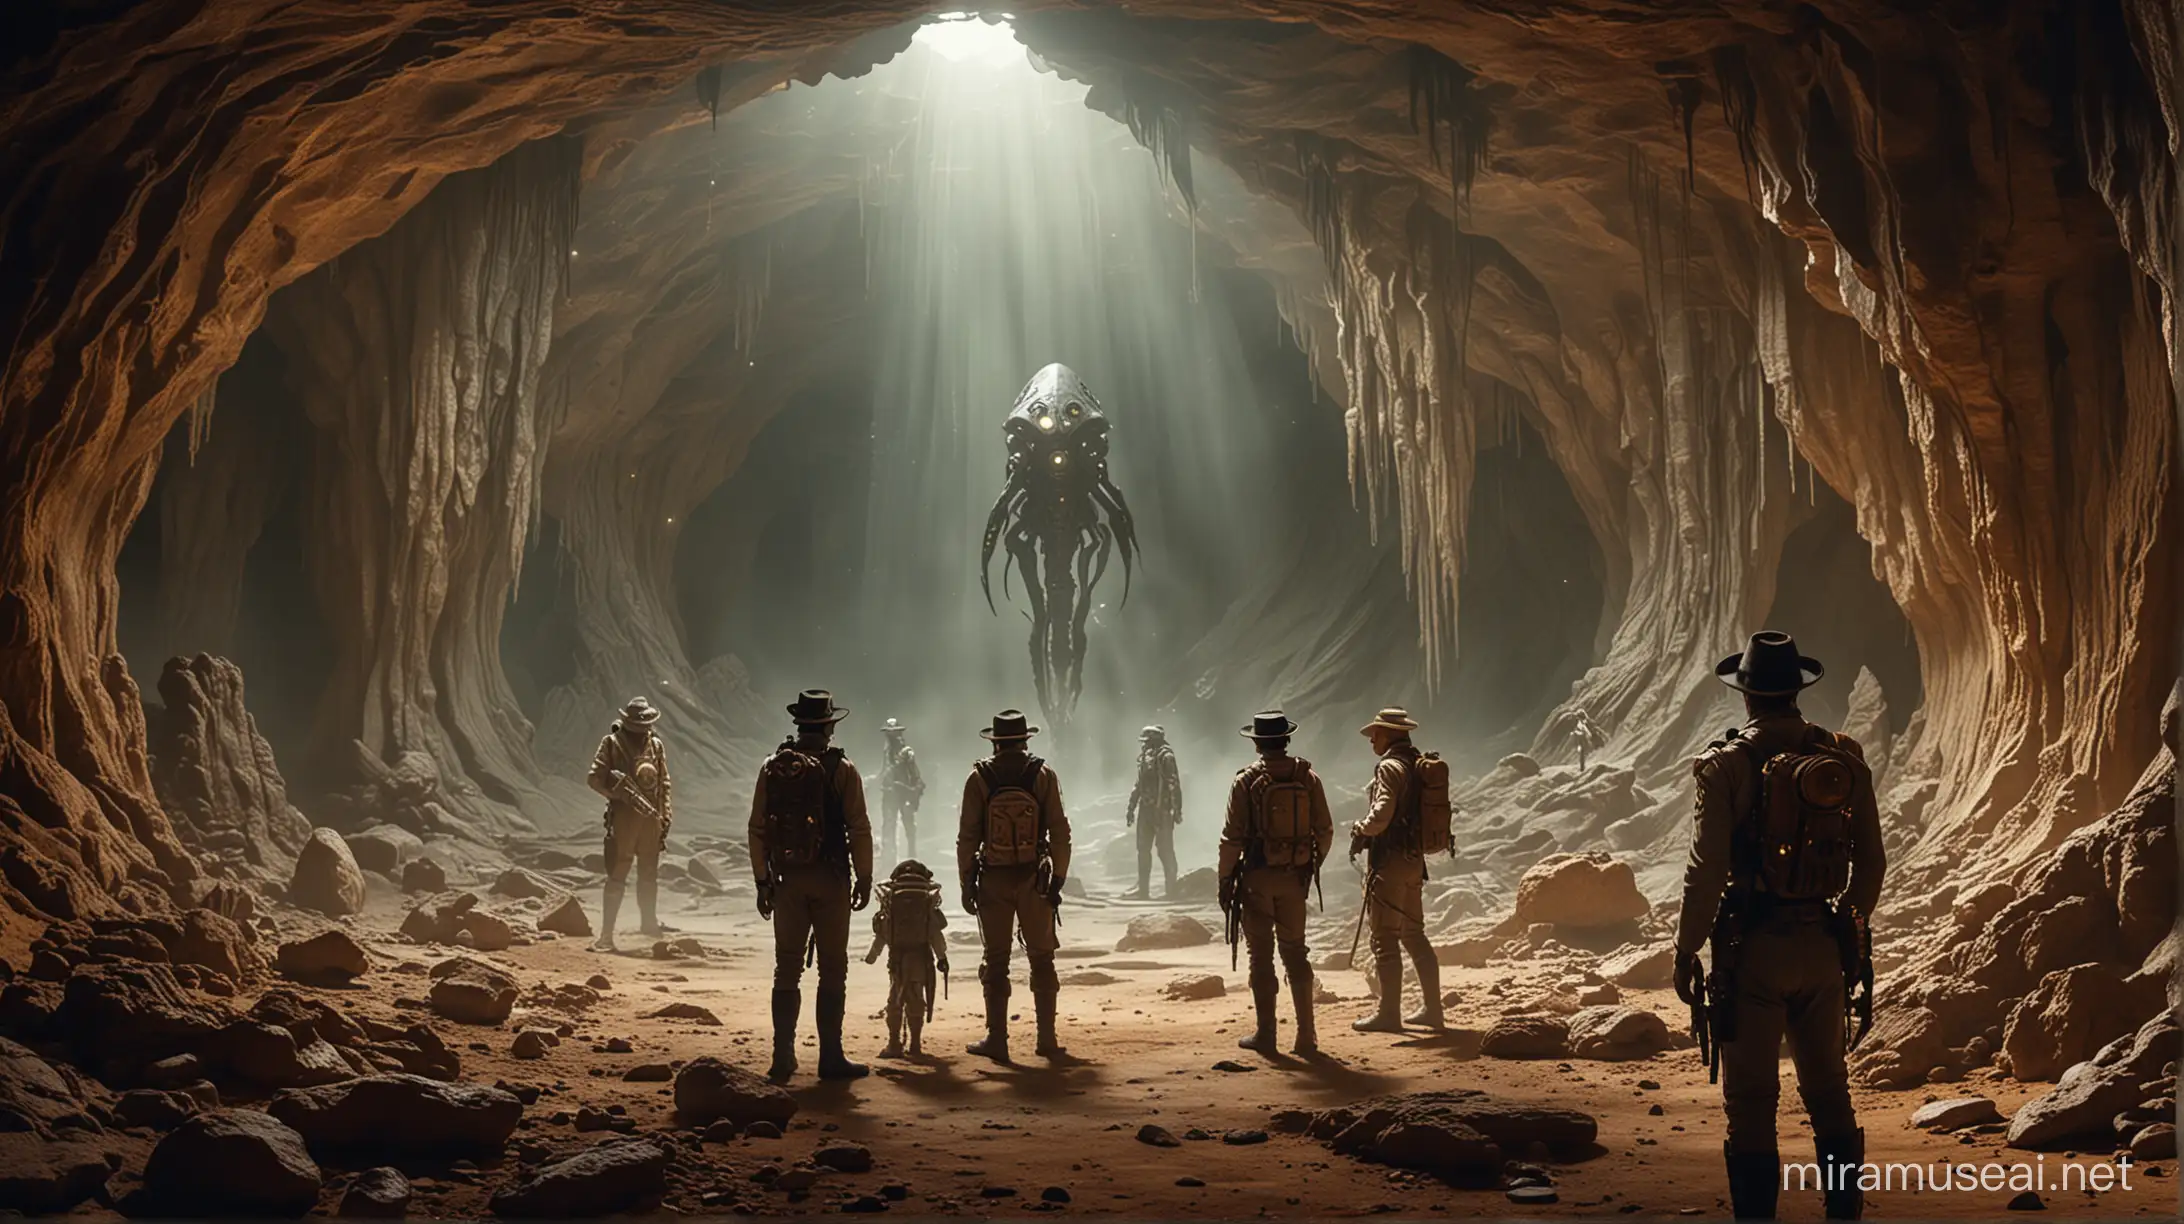 Steampunk Explorers Encounter Alien Life in Vast Cave